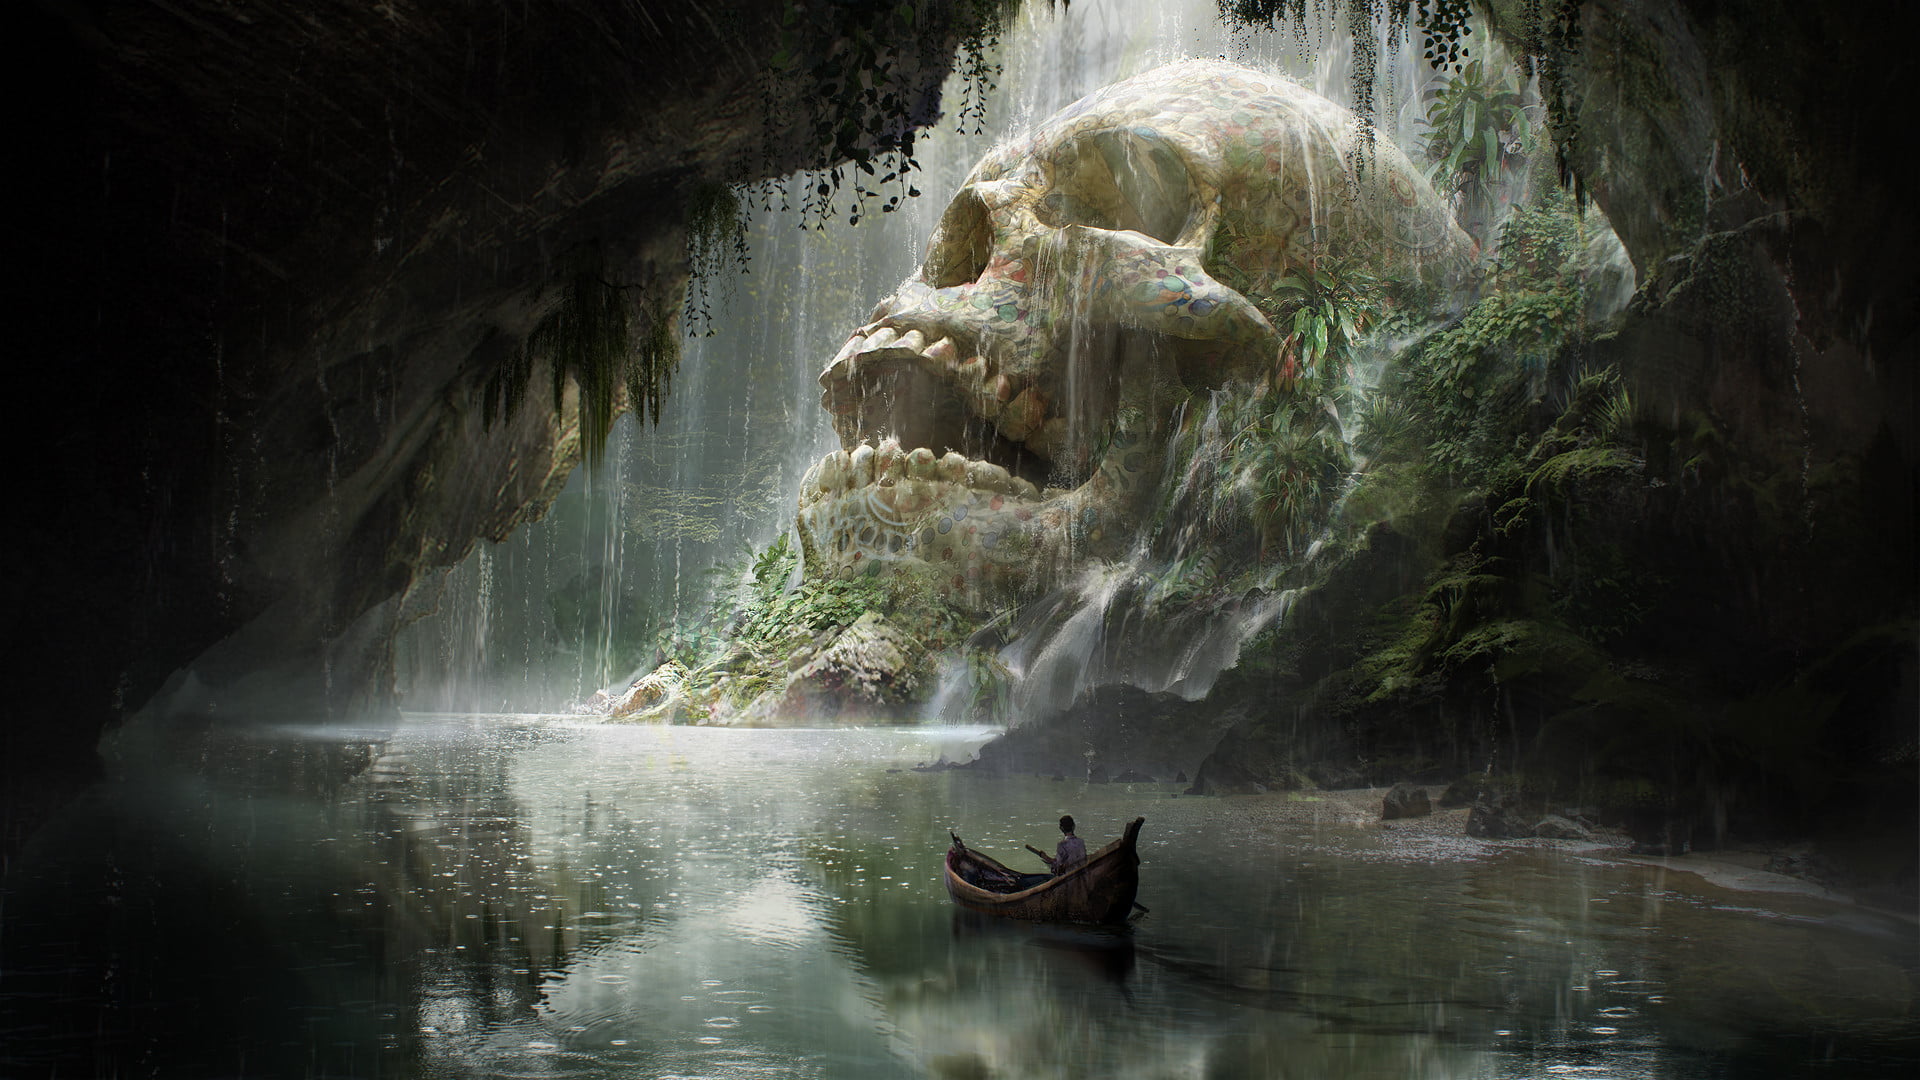 skull island character riding boat game application, man on boat near white skull movie scene